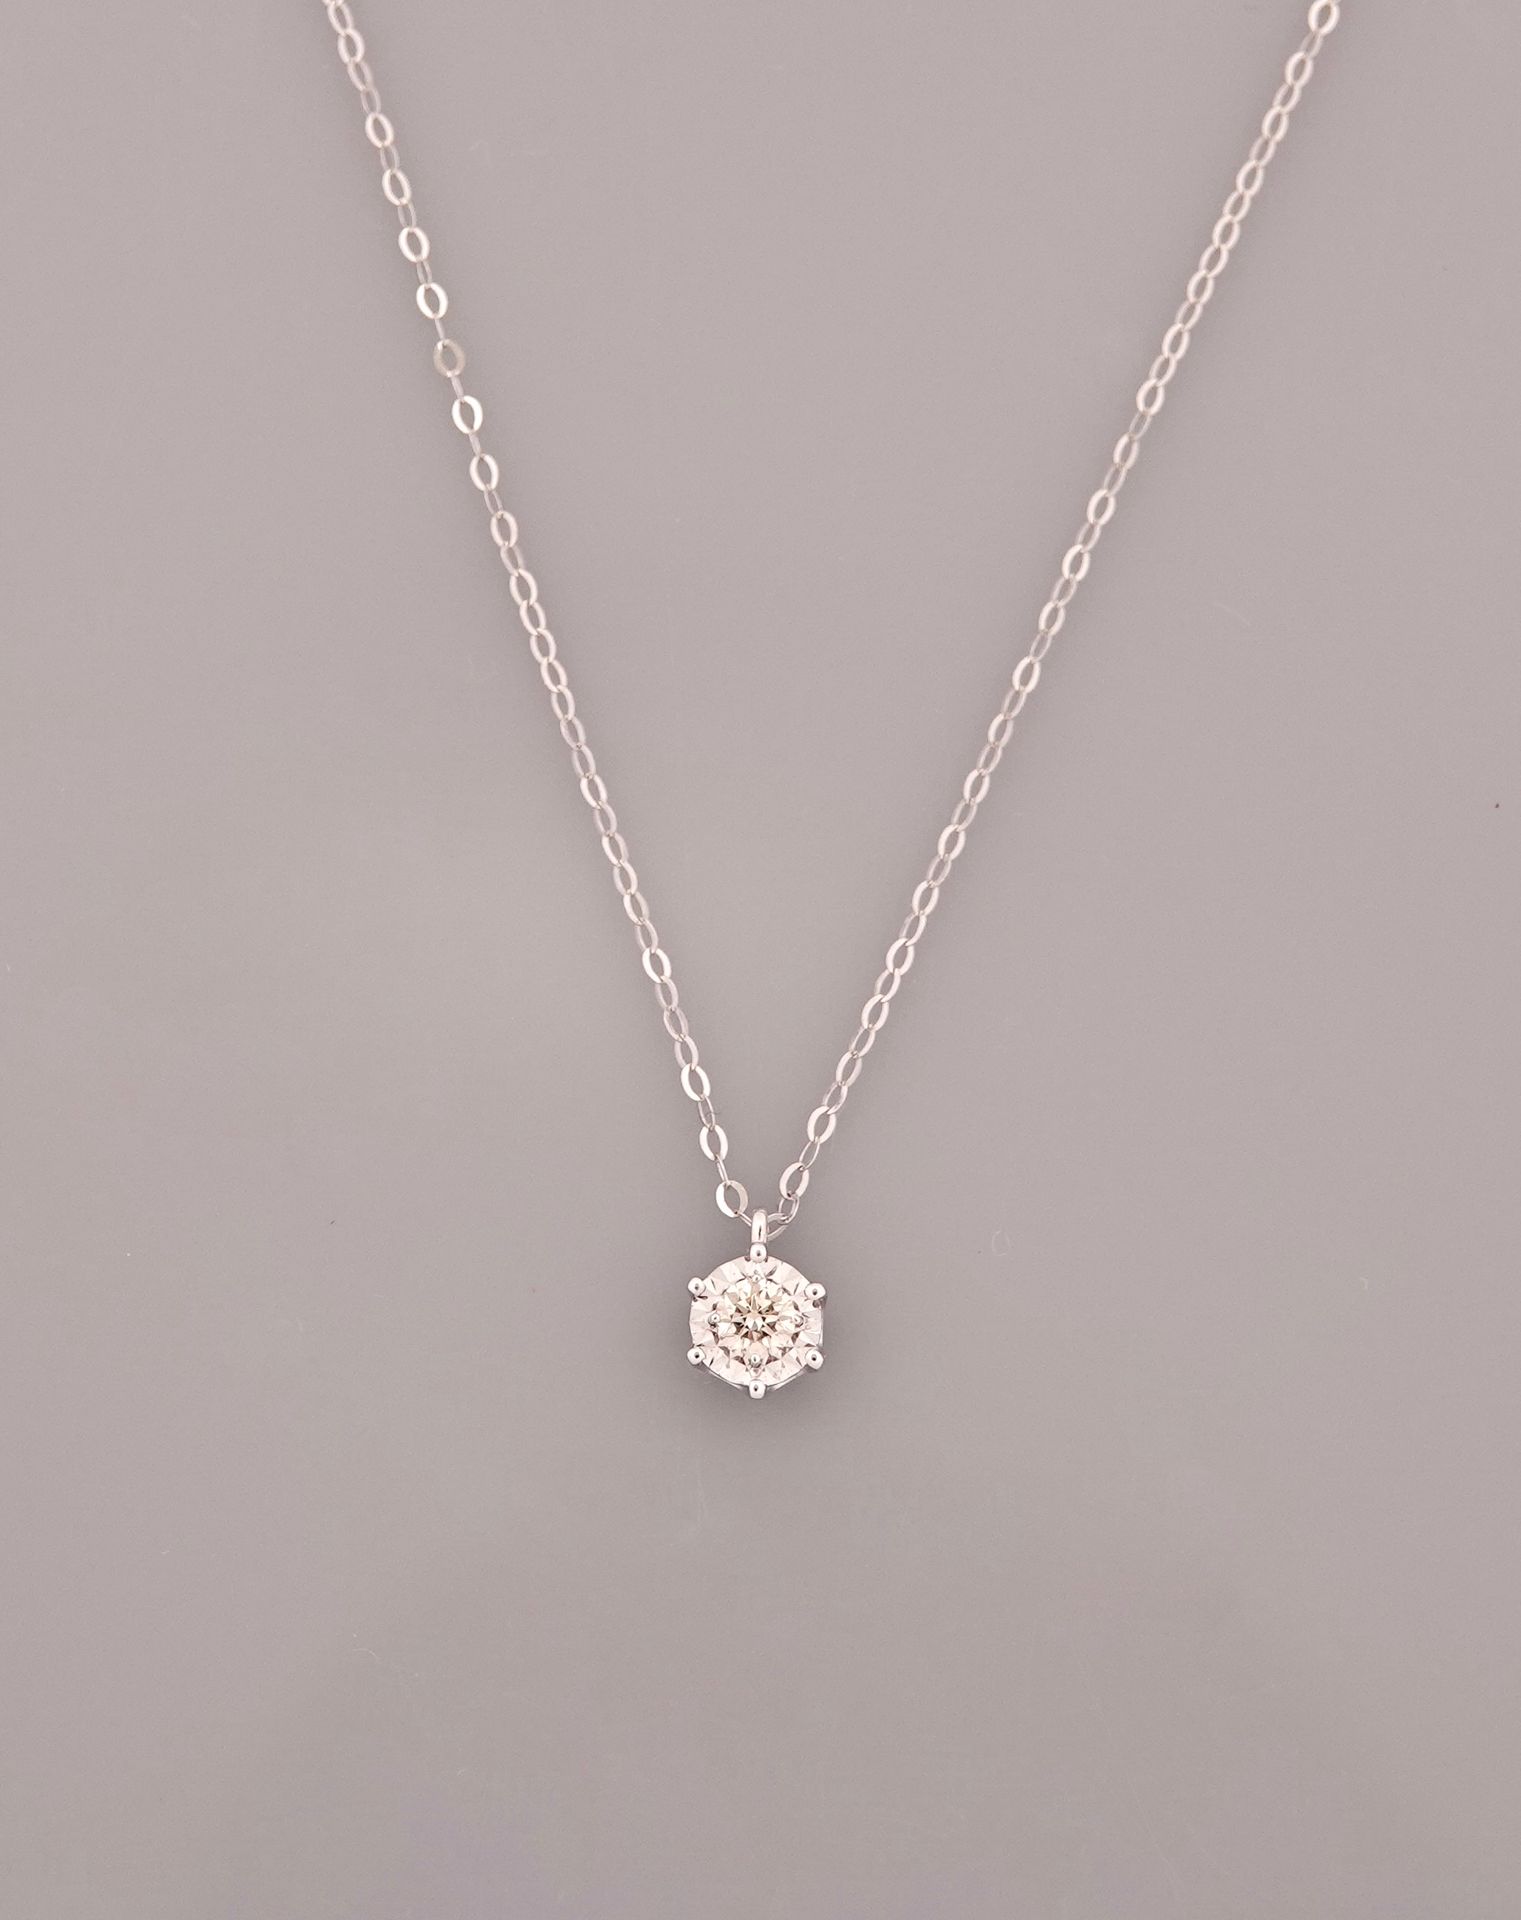 Null 白金项链，750毫米，中心有一颗重0.10克拉的钻石，弹簧环扣，可调节长度，42、44、46厘米，重量：0.7克。